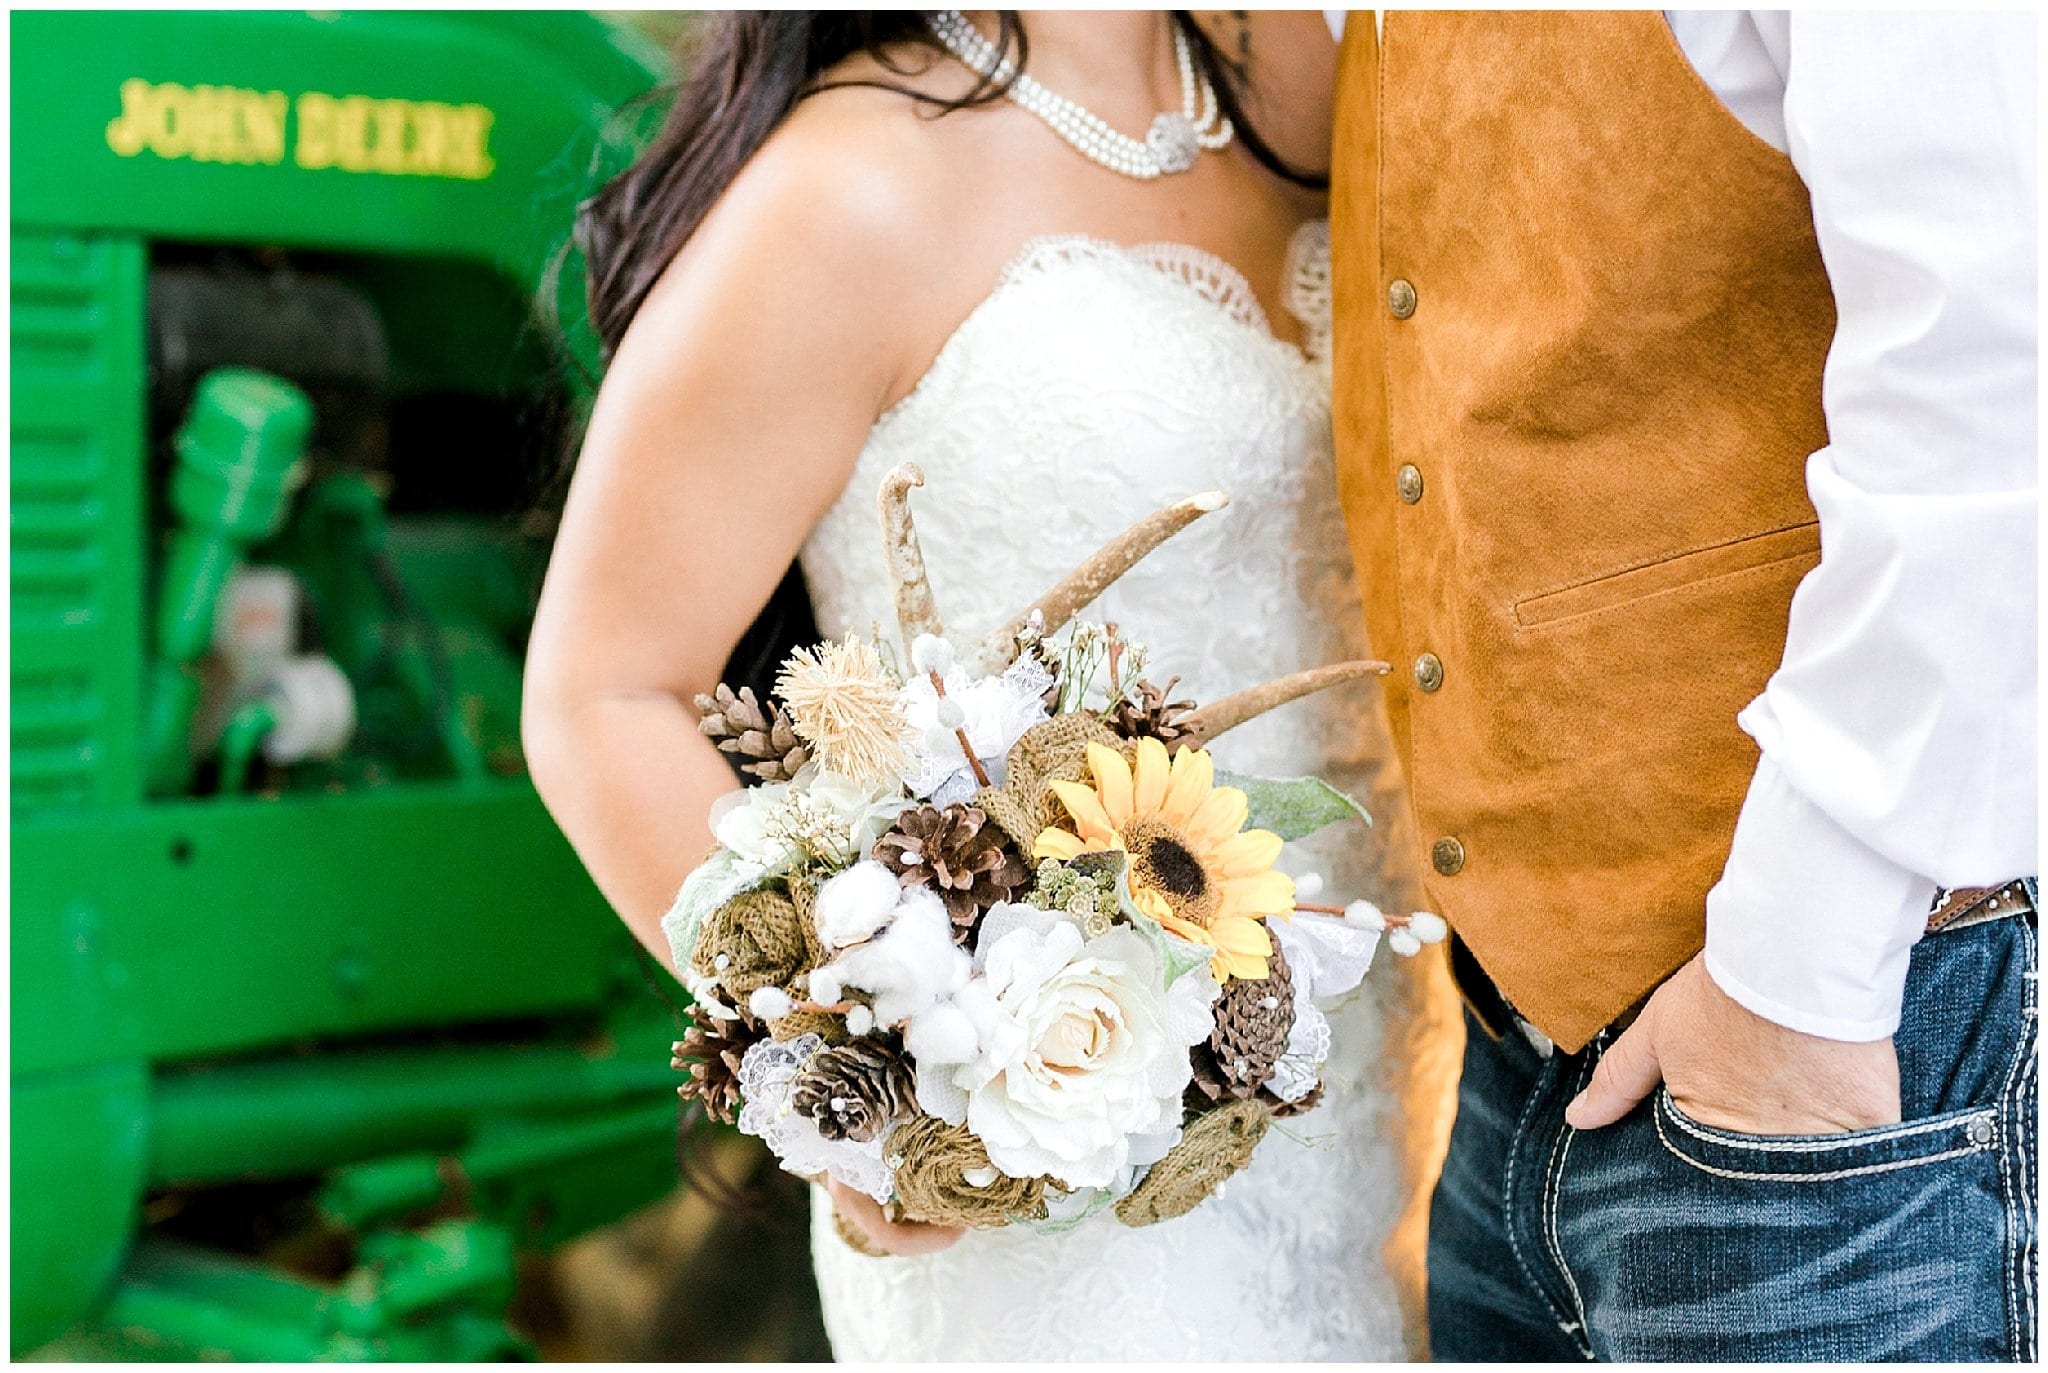 Windmill Winery Barn Wedding, Country Wedding, Outdoor Wedding, Country themed wedding, Tractors, John Deere Wedding, Big Red Barn Wedding, Bride and Groom Portraits